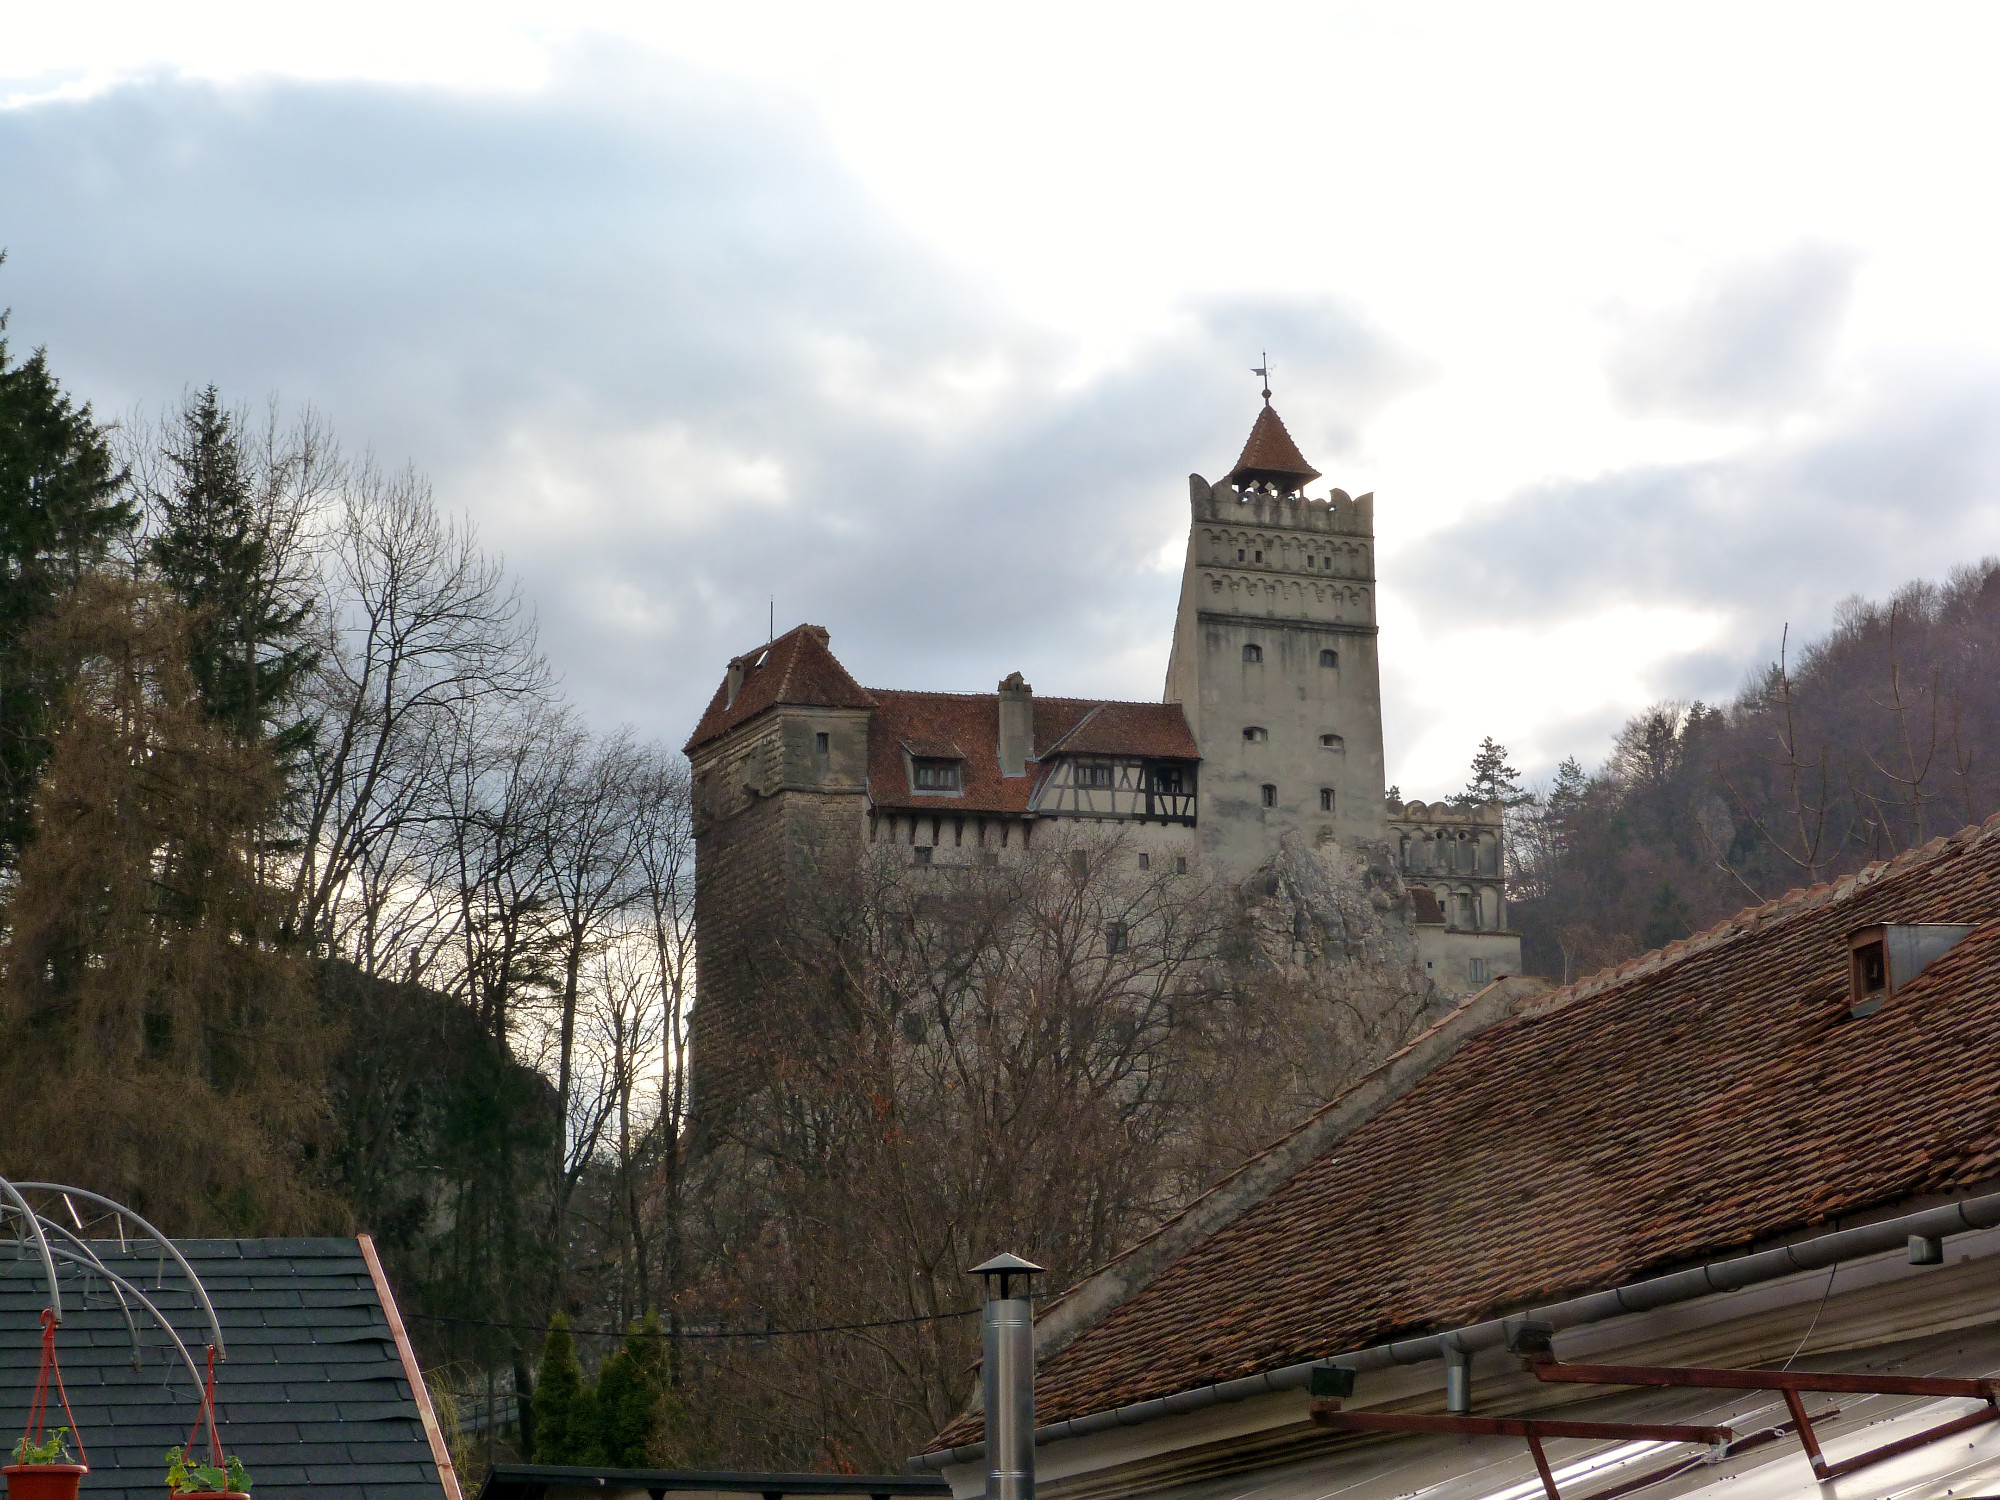 Castle side view